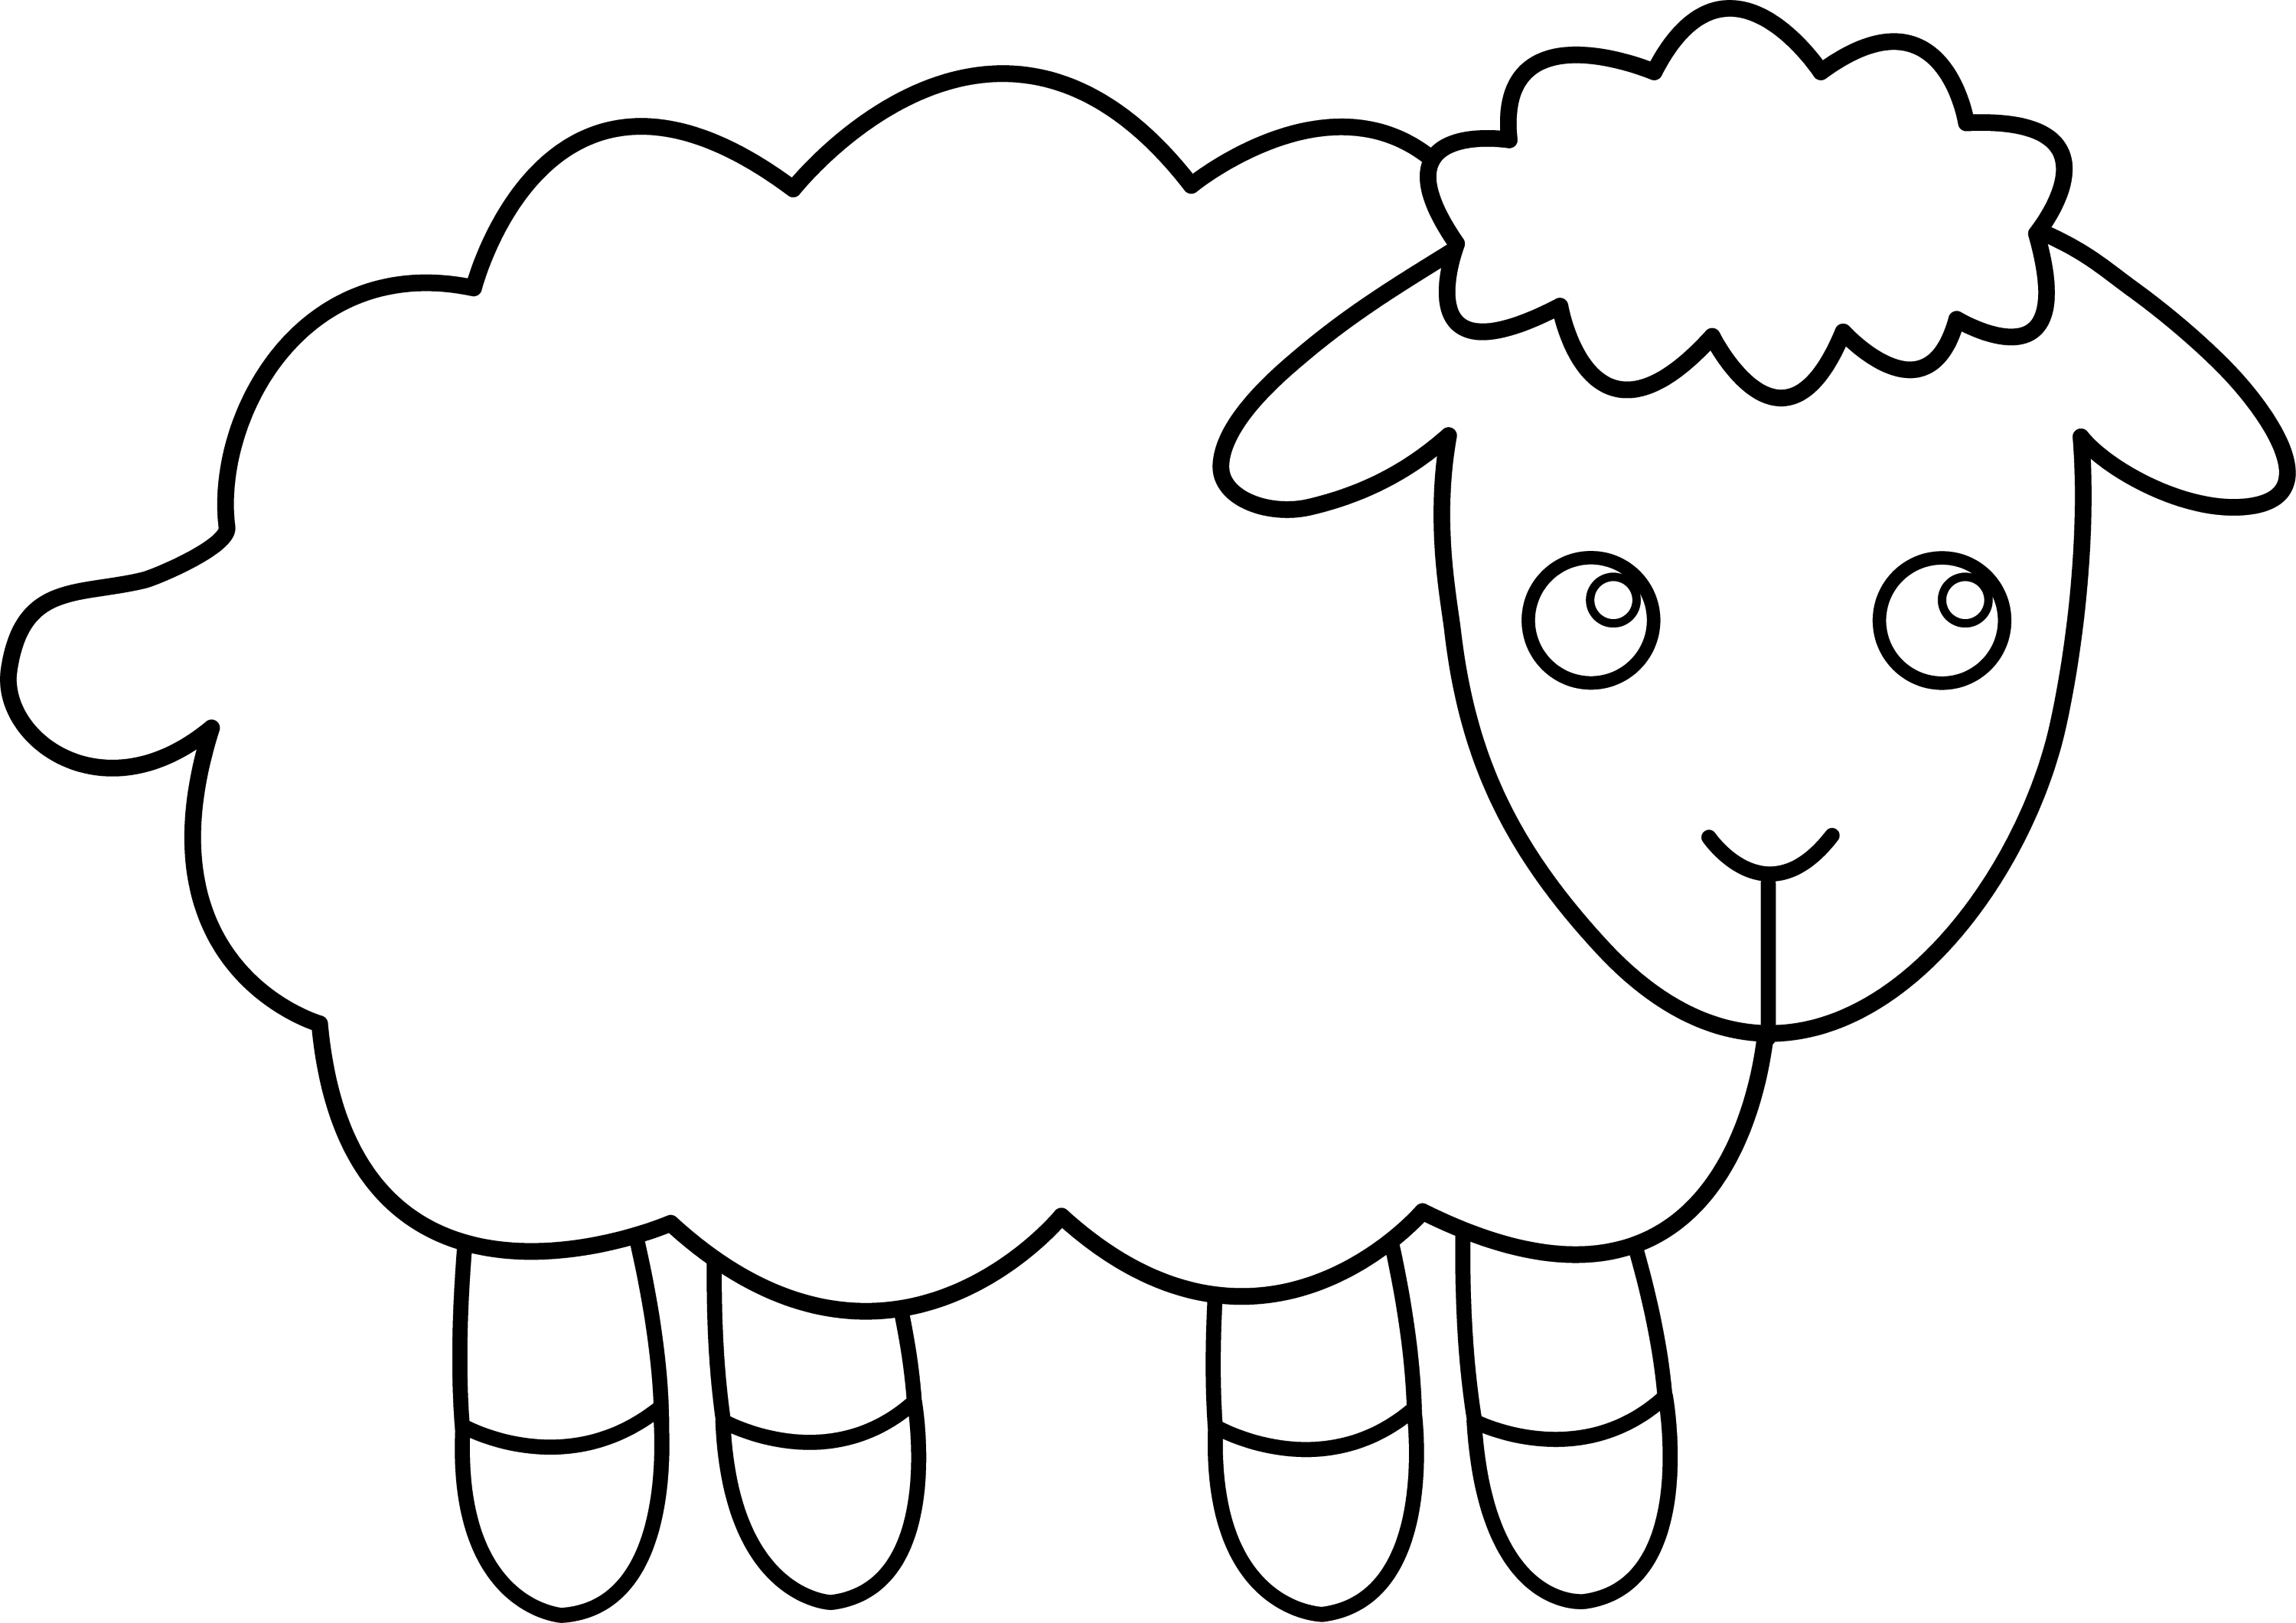 sheep-ildn-rk